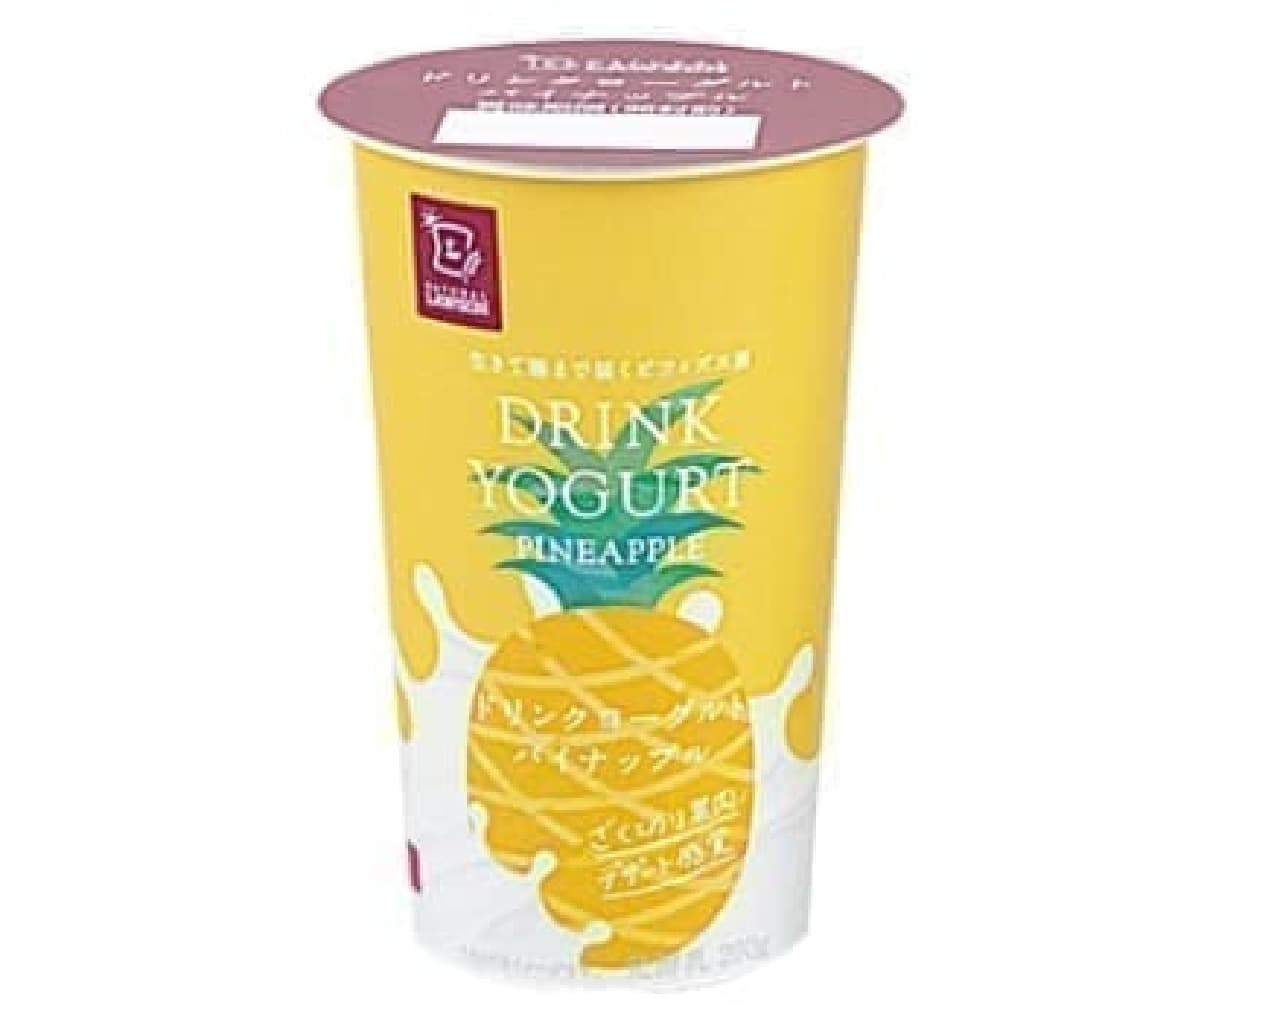 NL Drink Yogurt Pineapple 200g